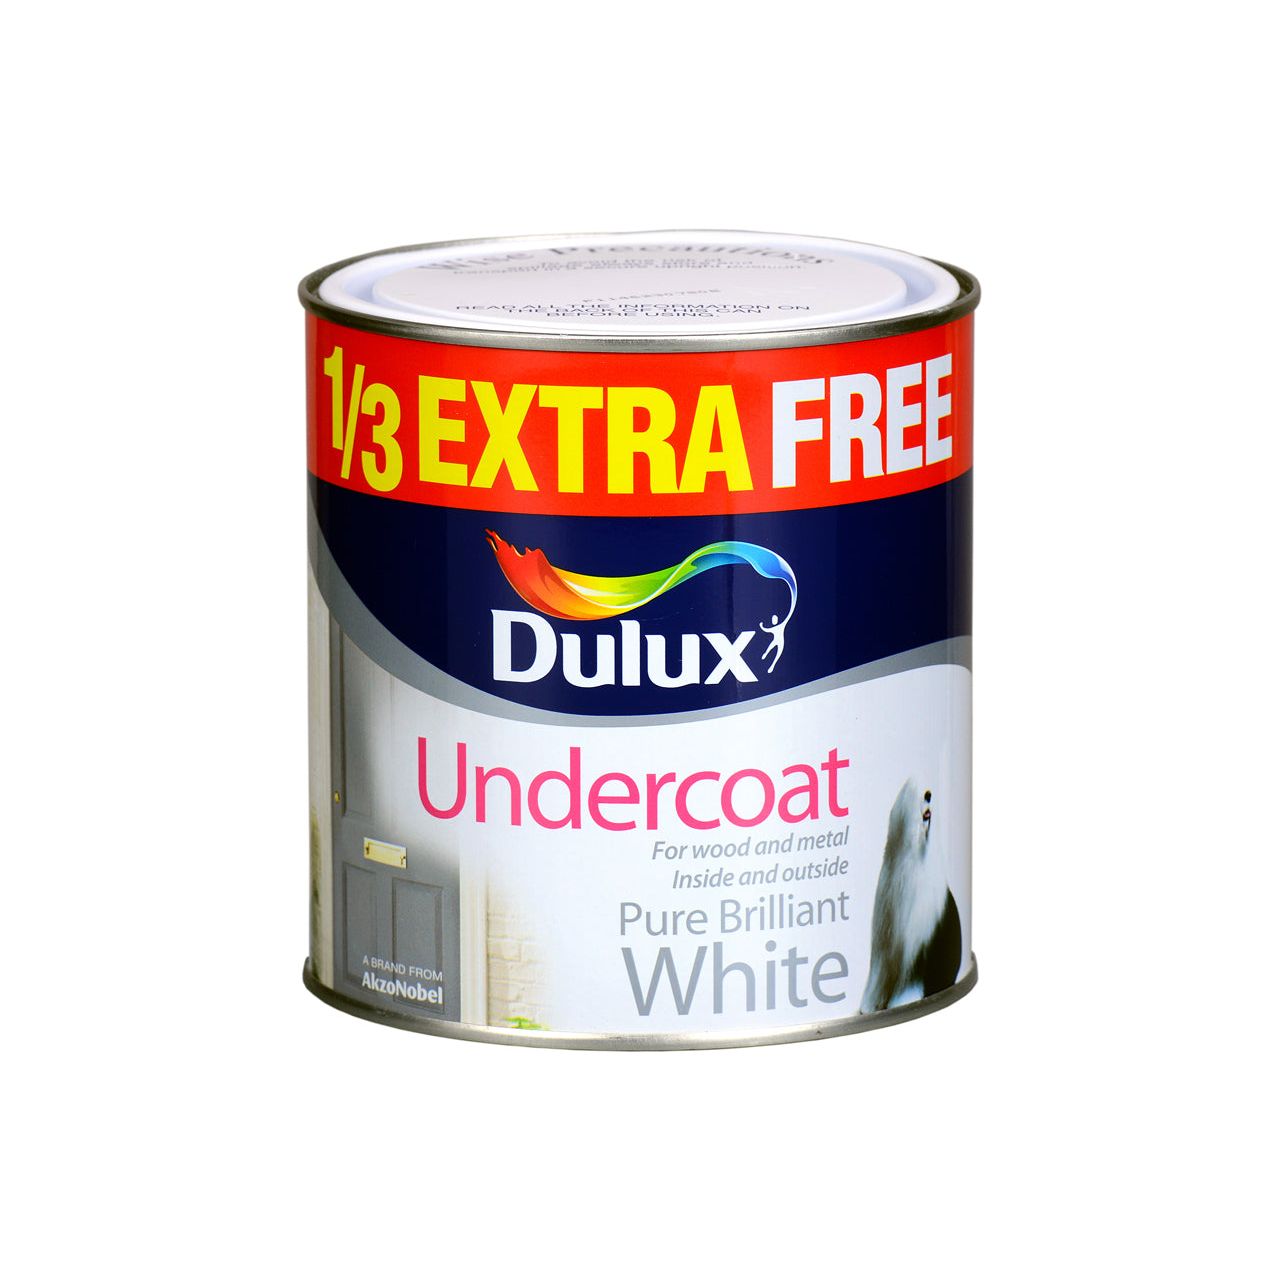 Dulux Undercoat Brilliant White 1L 33%